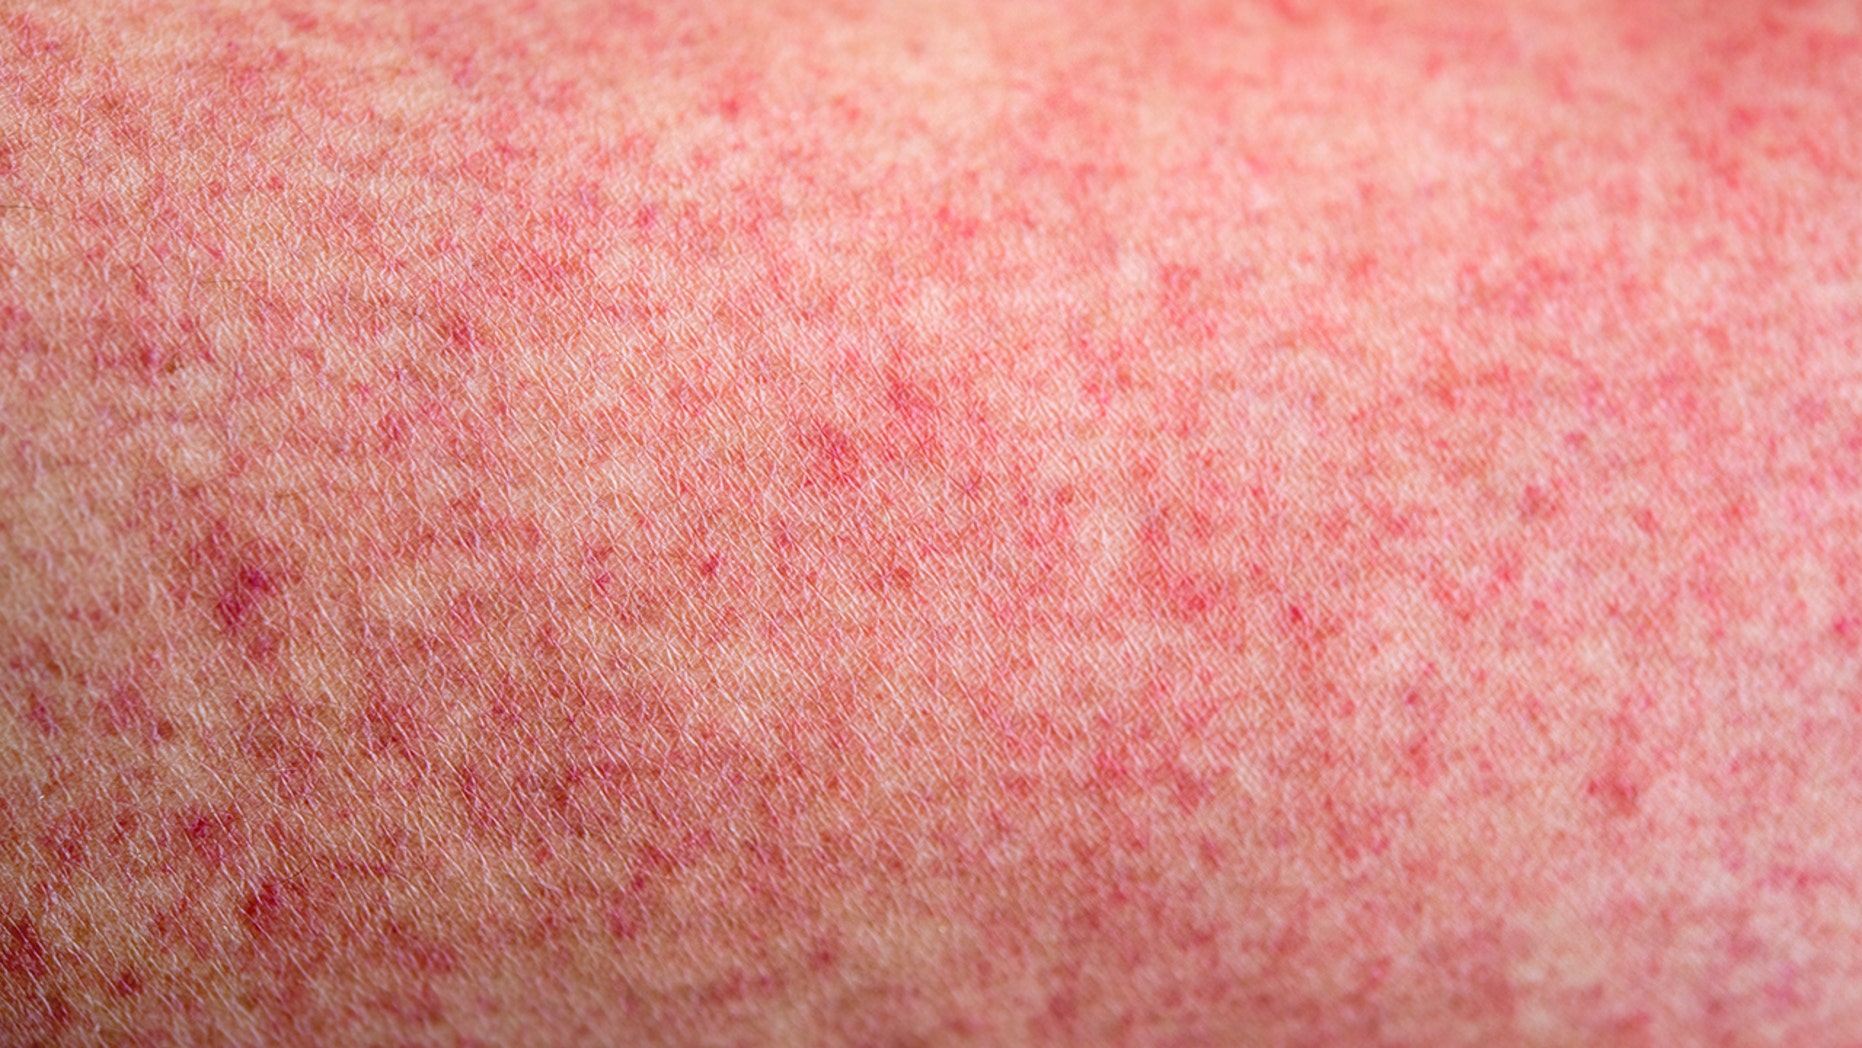 covid rash in adults treatment